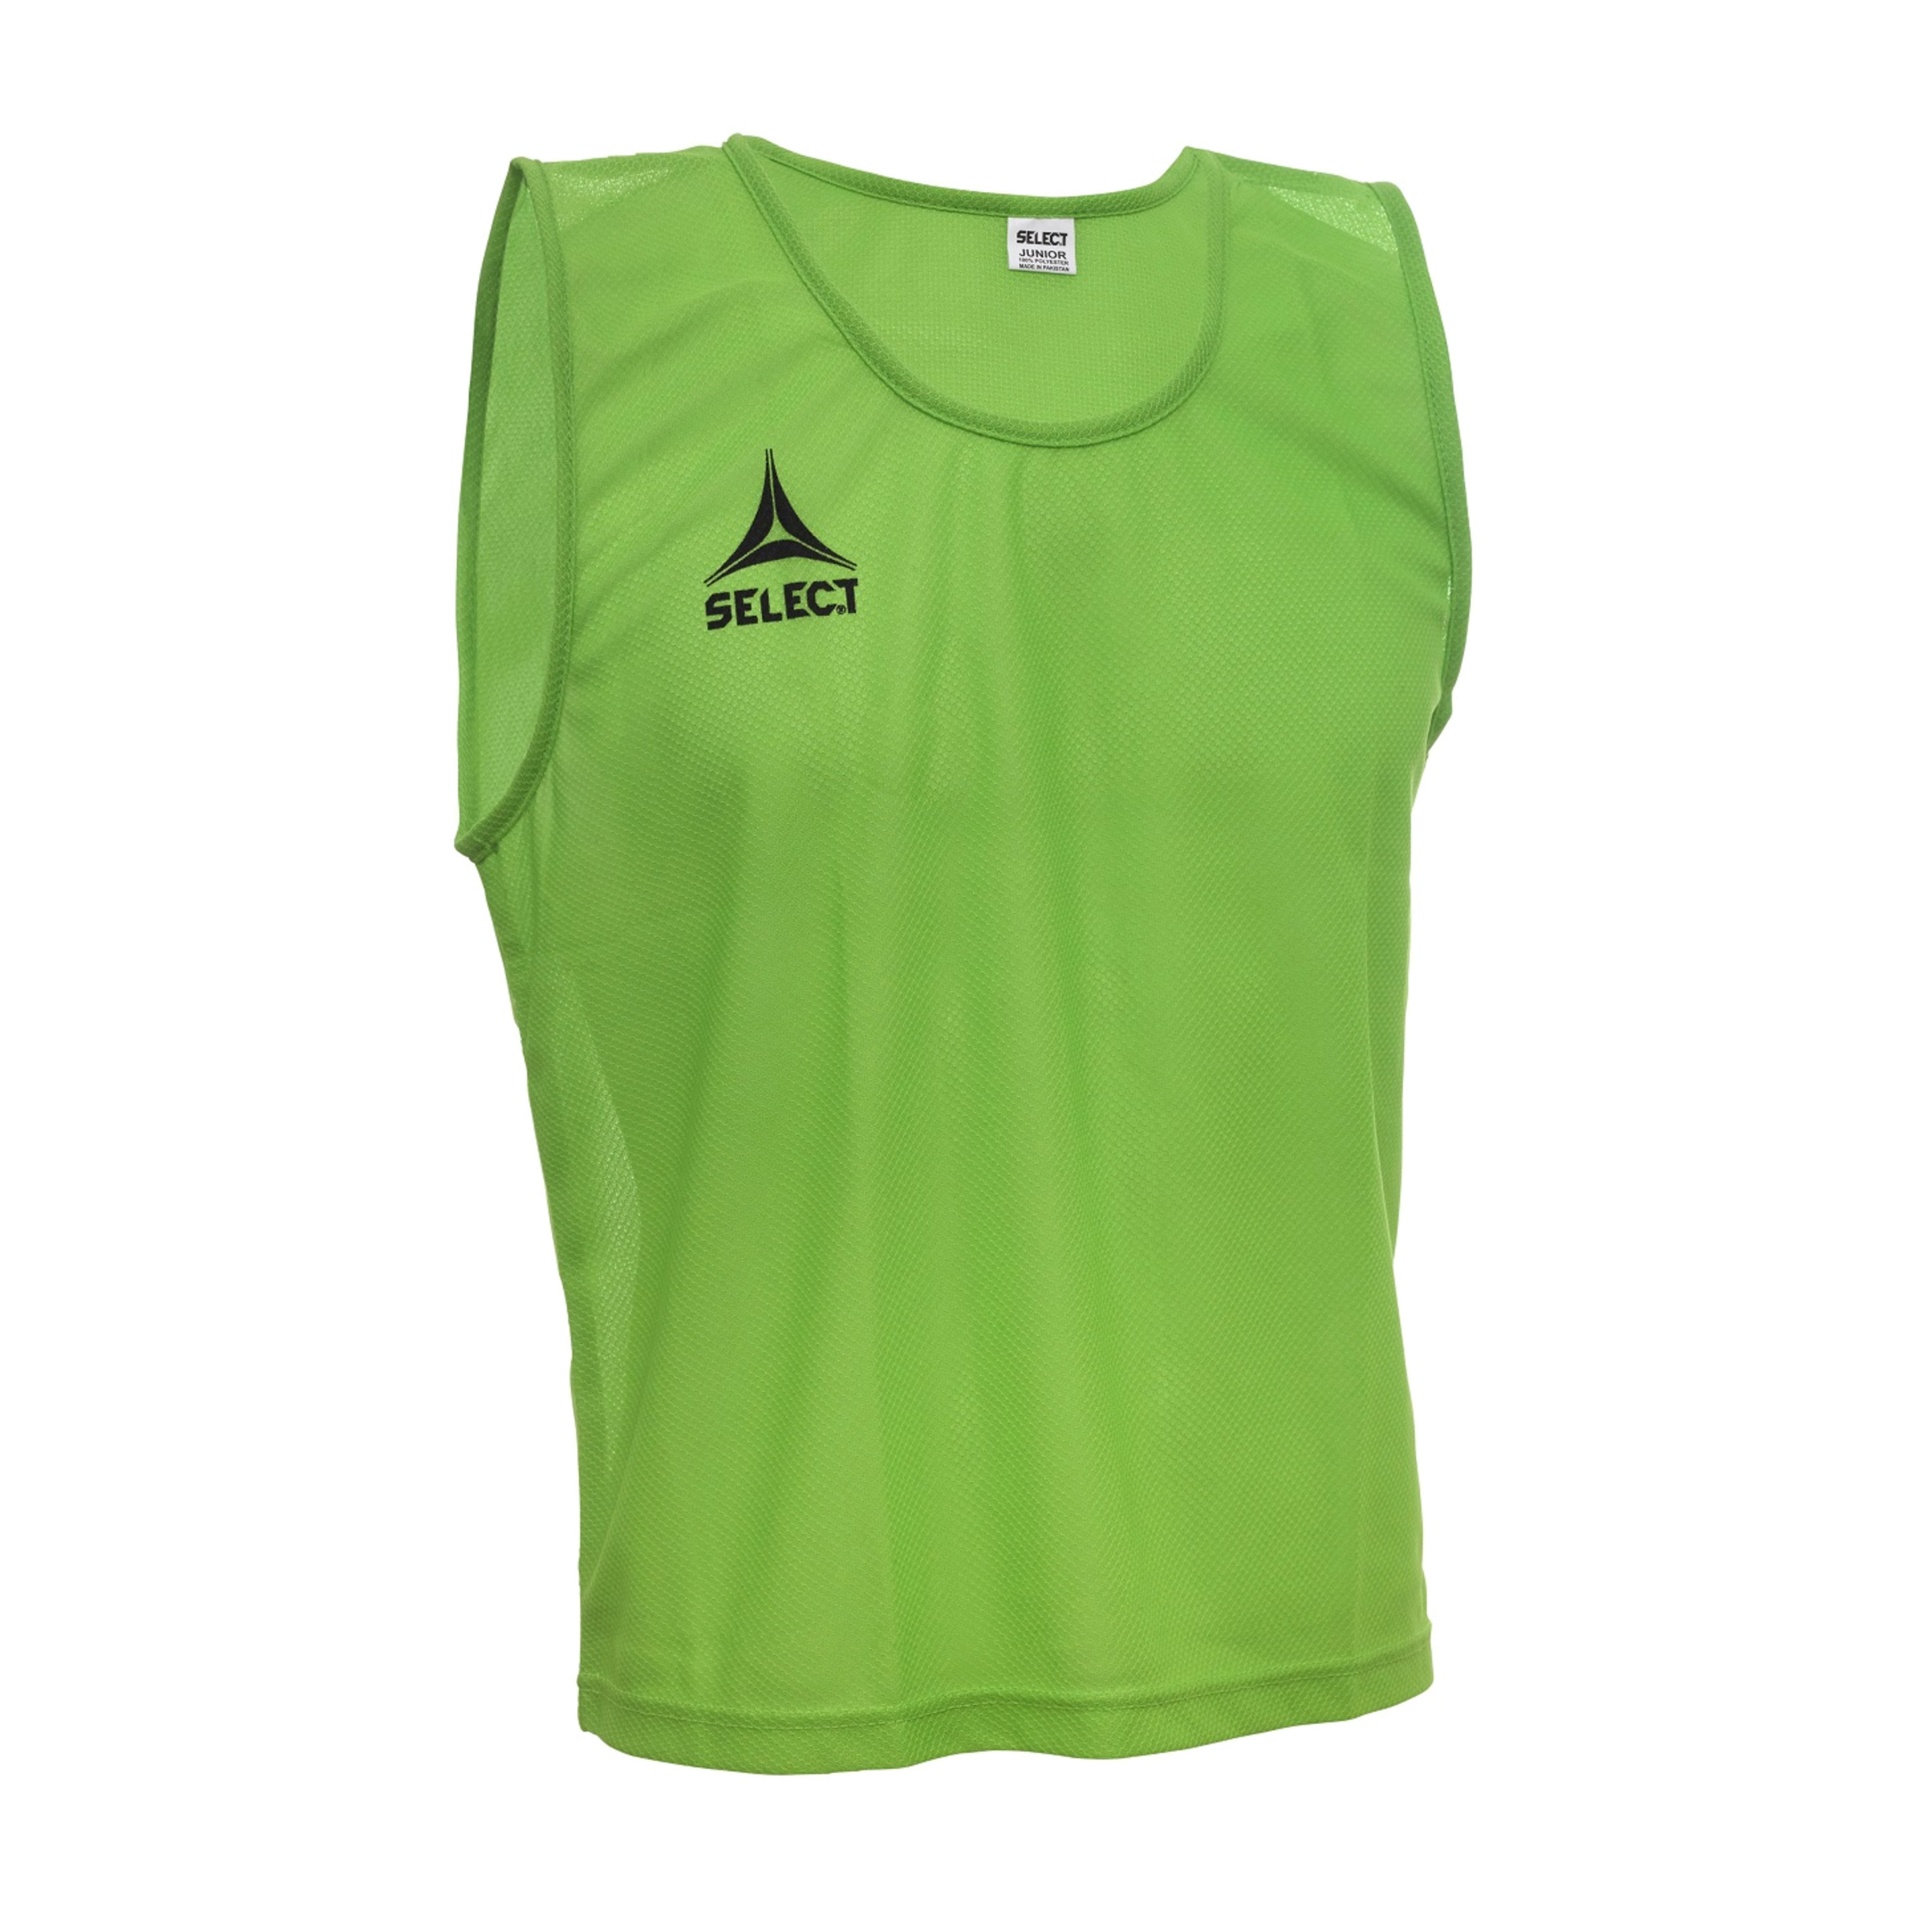 Camiseta Select Basic - verde - 